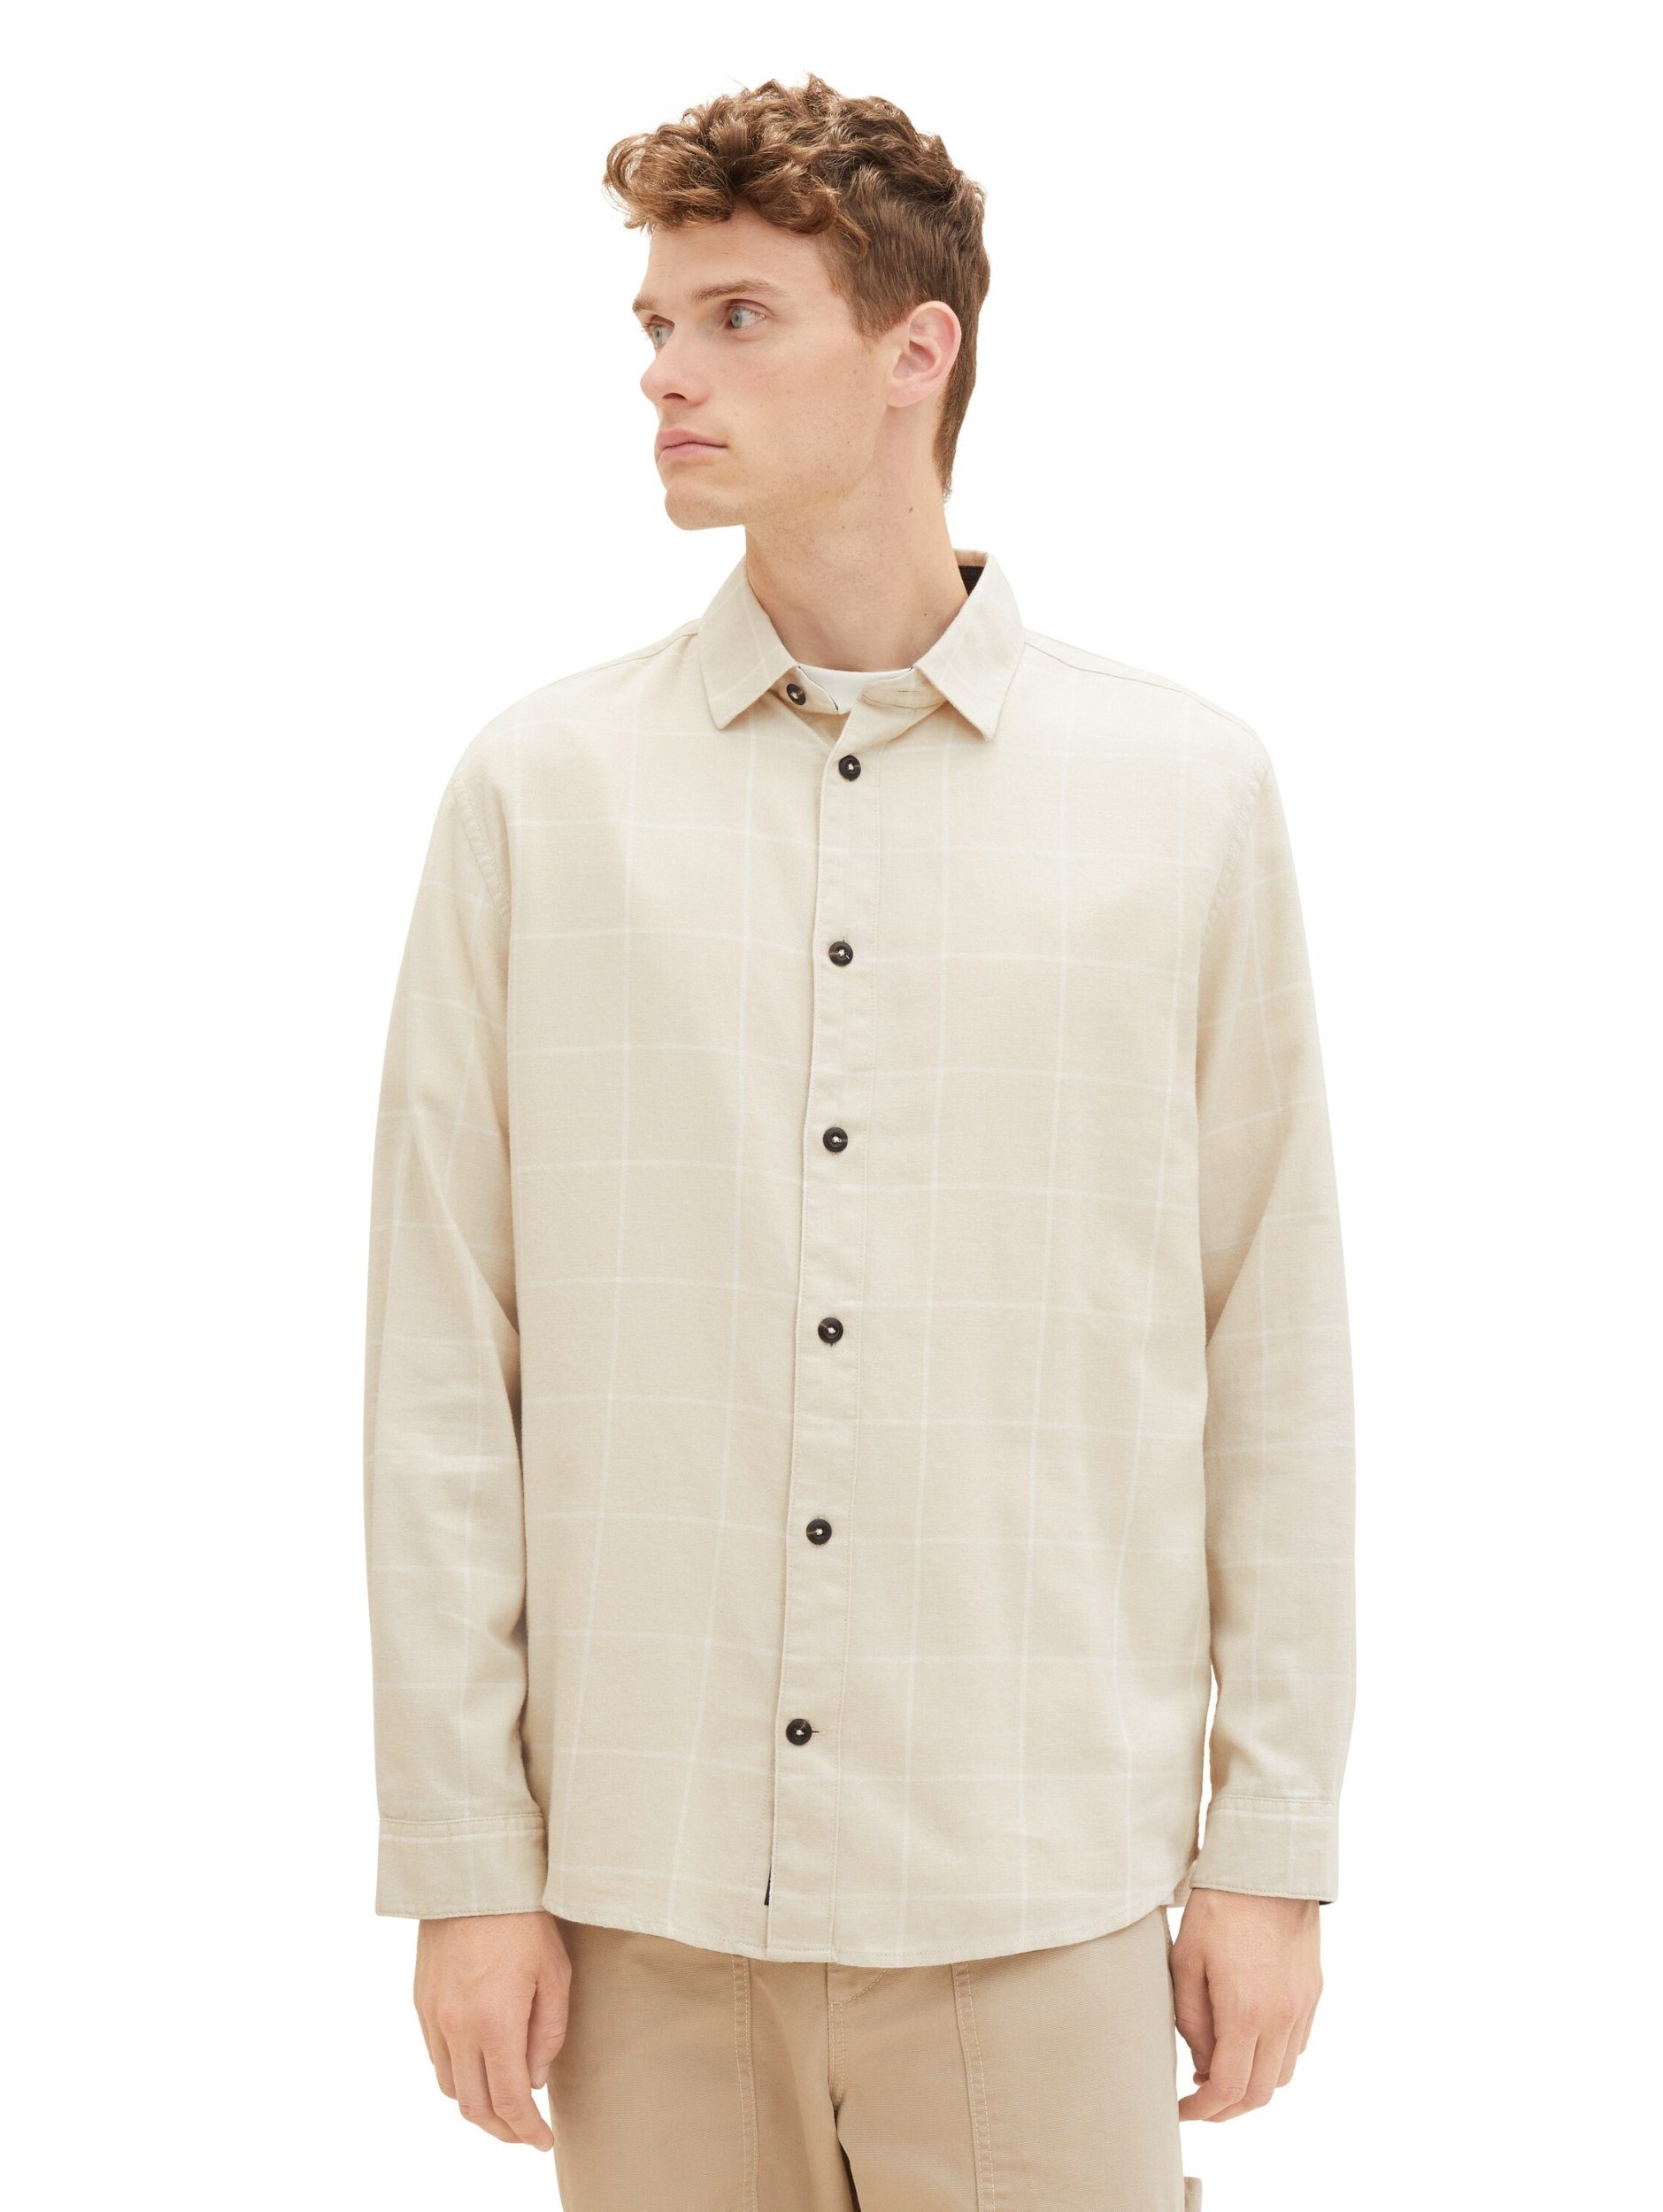 TOM TAILOR Kurzarmshirt comfort tonal shirt checked check vintage beige tonal